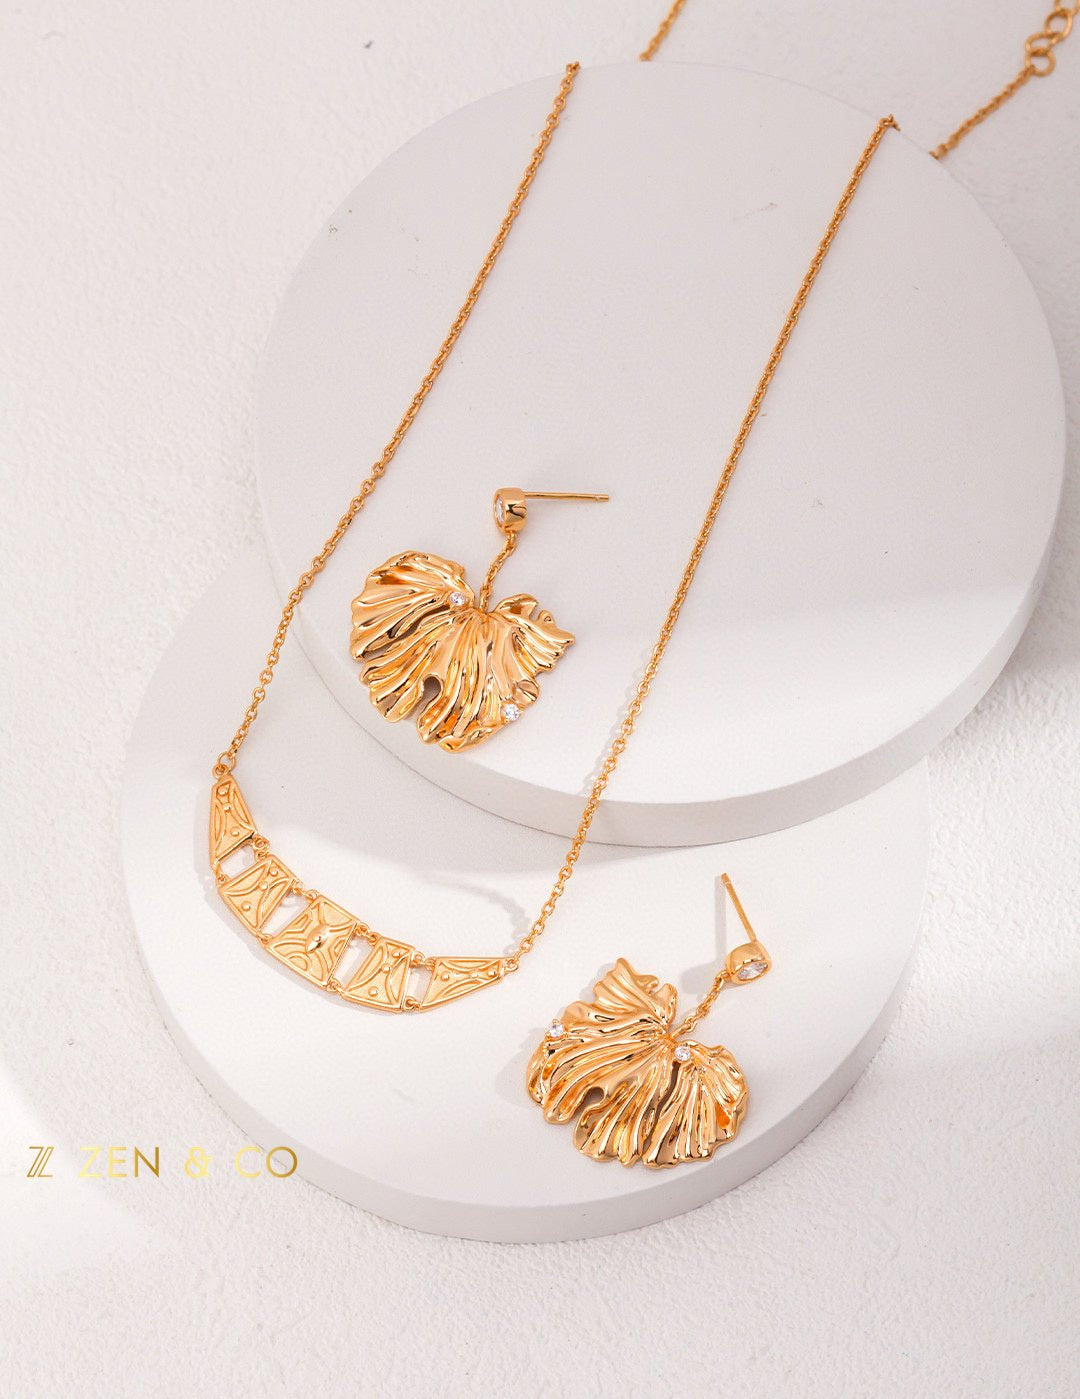 LUCY GRAY Gold statement dangle earring - ZEN&CO Studio